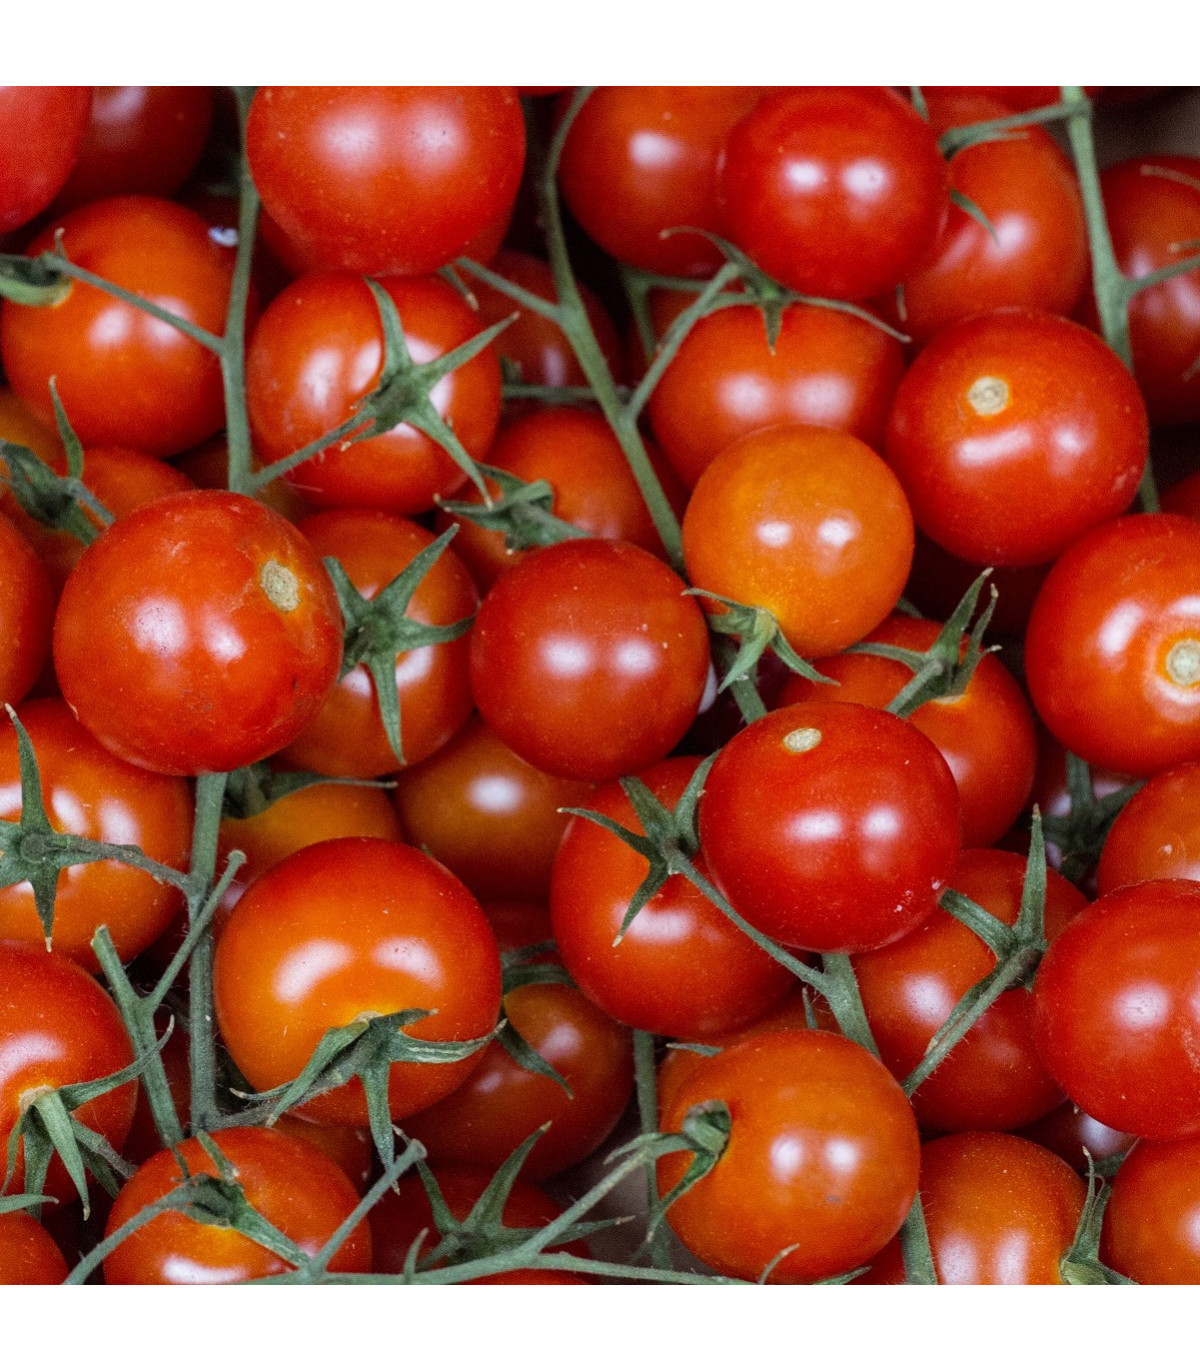 BIO Rajče polní zakrslé Saint Pierre - Lycopersicon esculentum - bio osivo rajčat - 7 ks